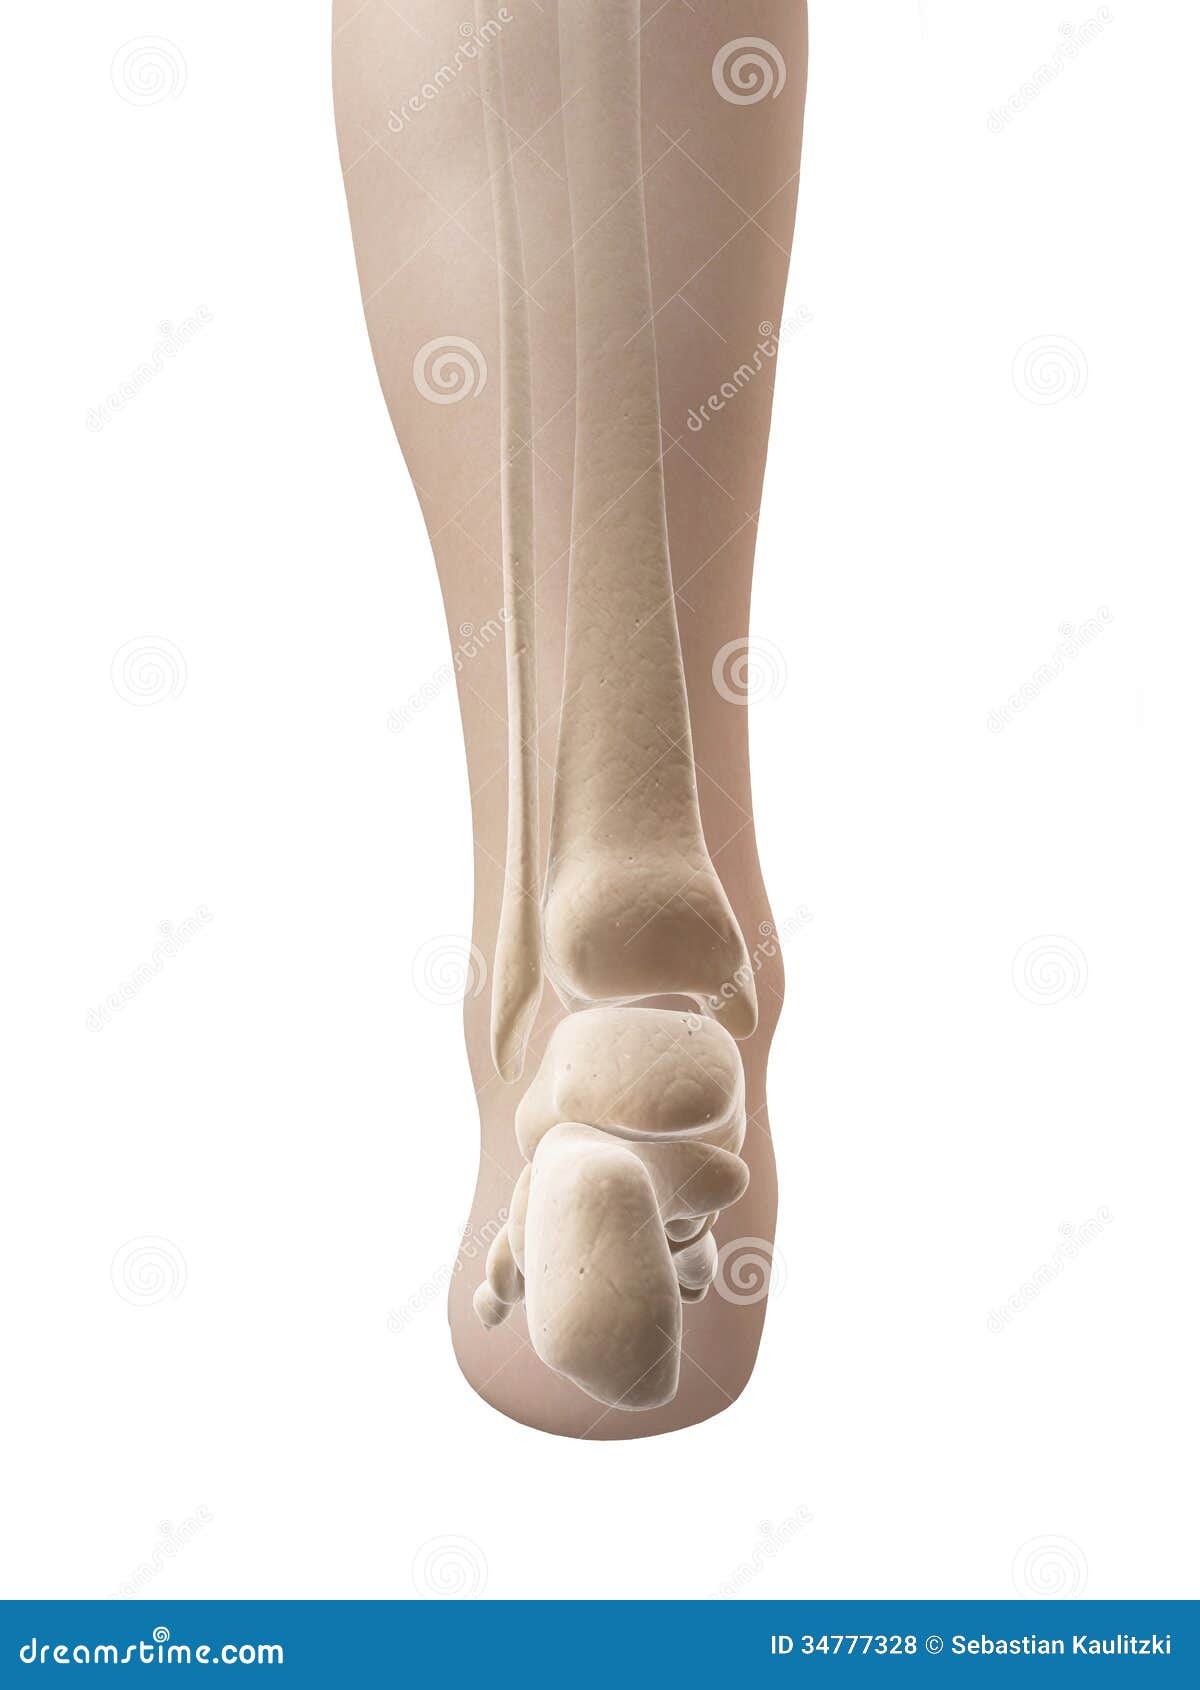 Skeletal Foot Anatomy Royalty Free Stock Photos - Image: 34777328